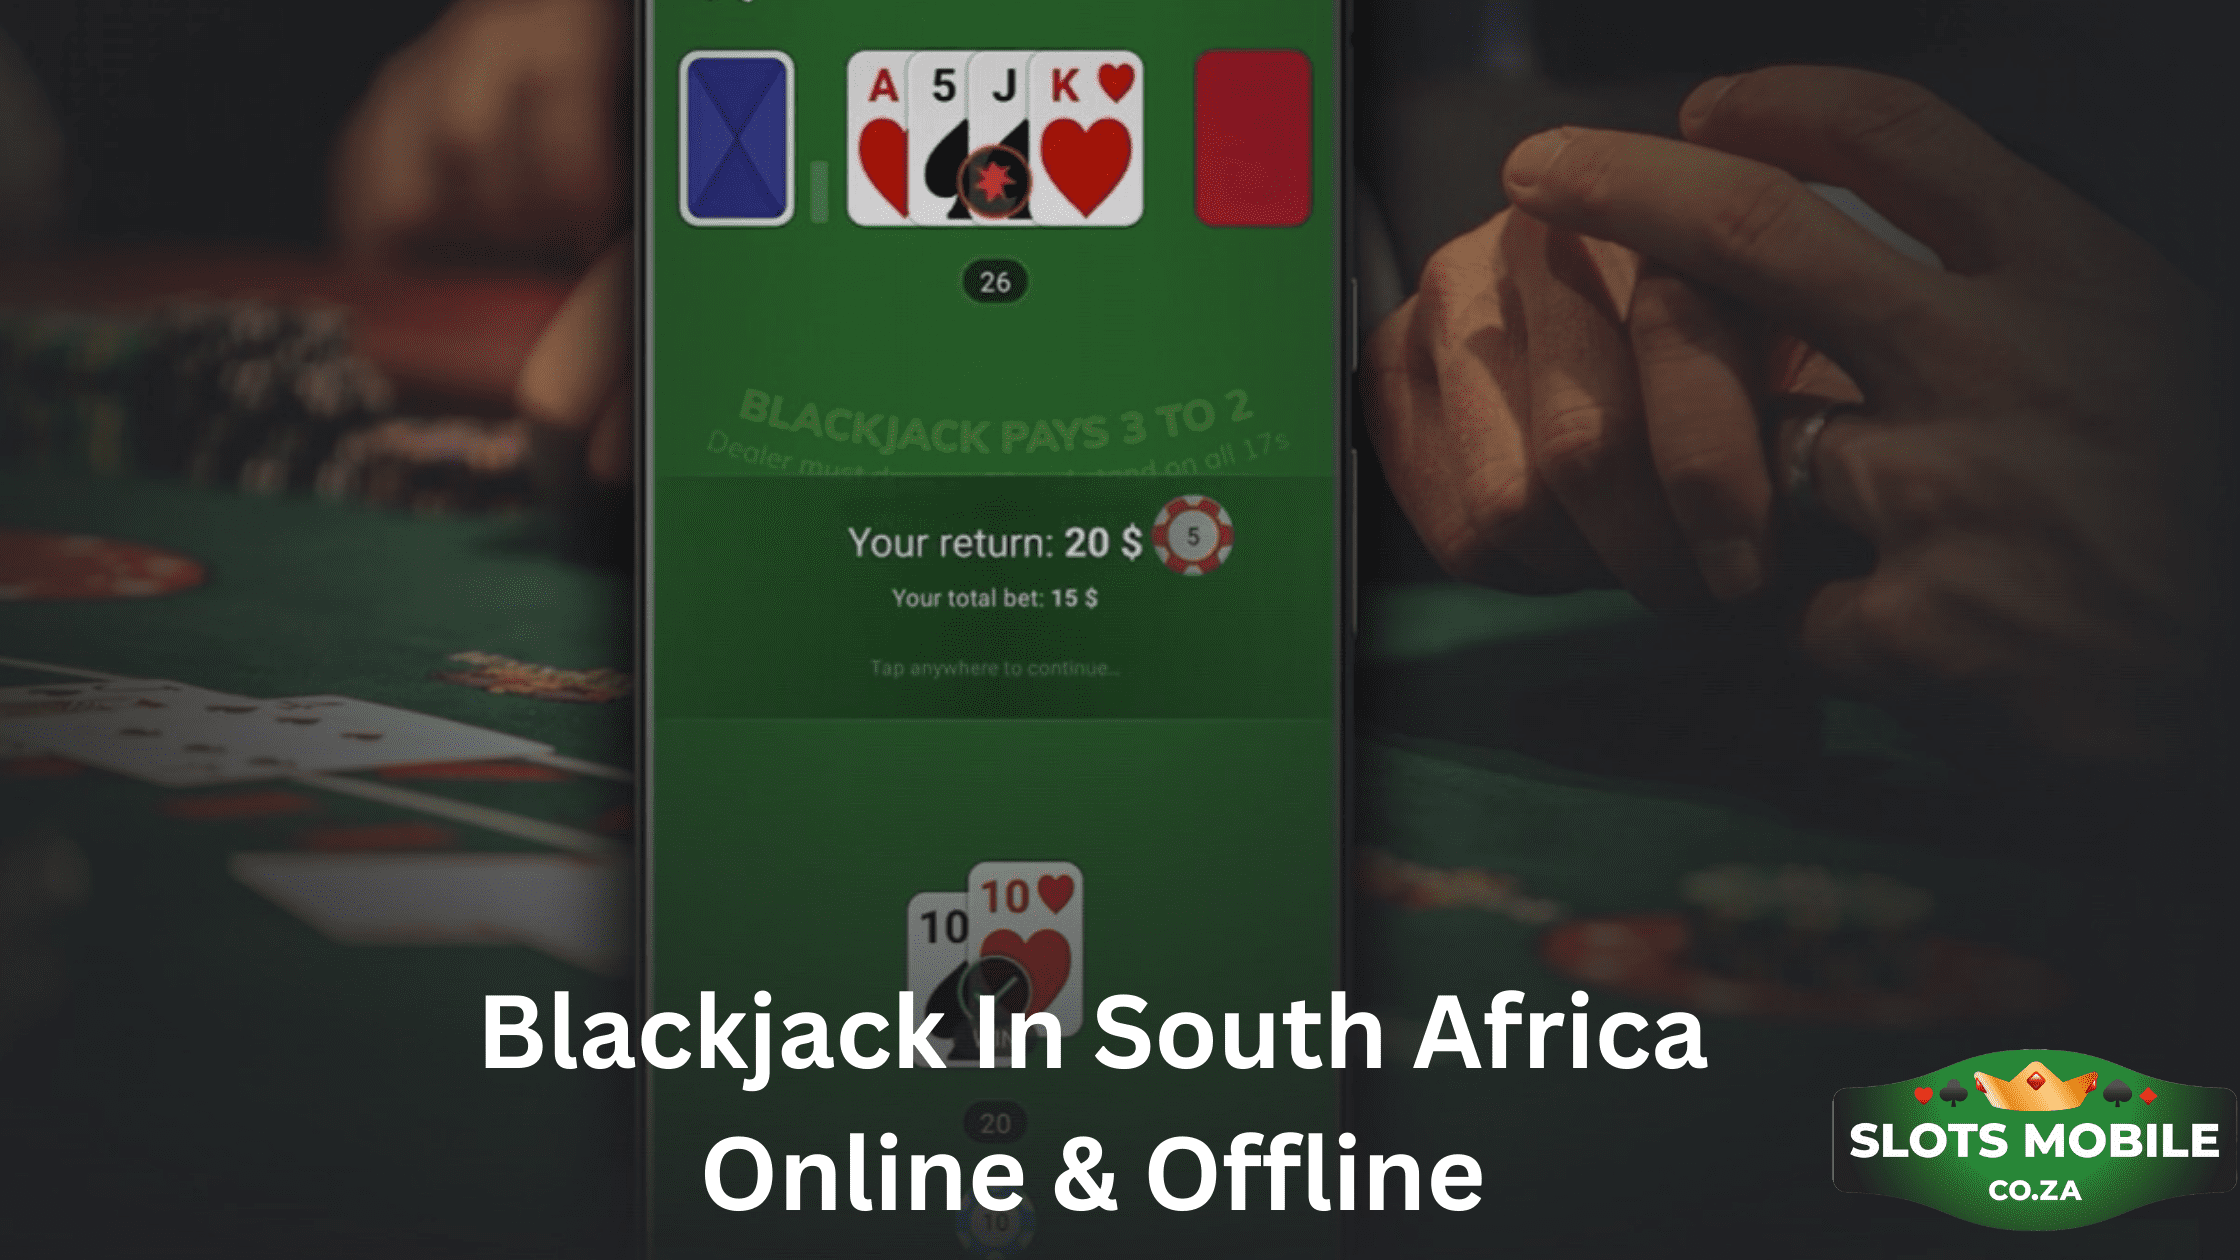 Blackjack in South Africa